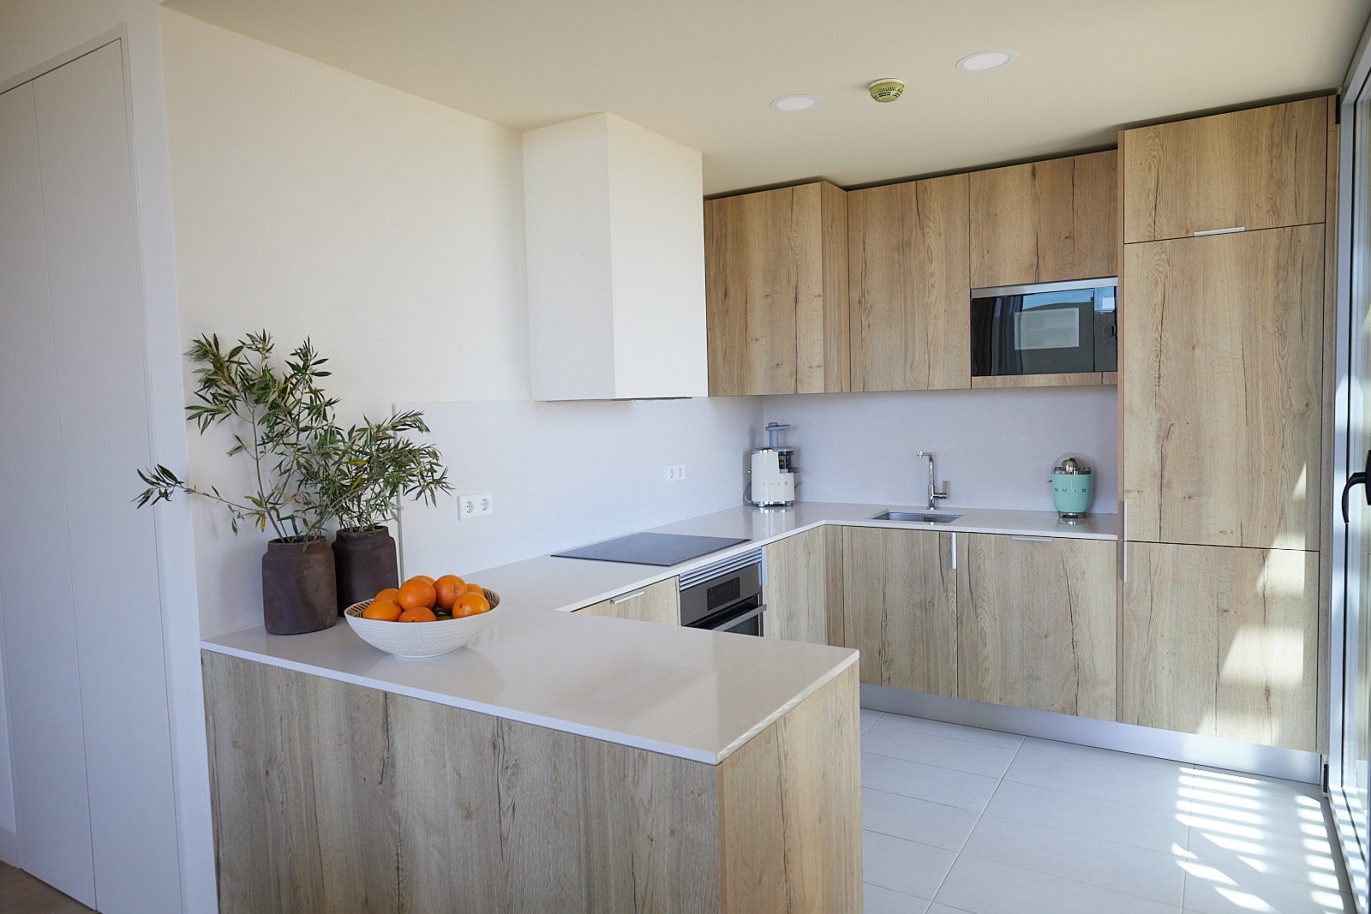 2 bedroom apartment in resort, for sale in Porches, Algarve_228807